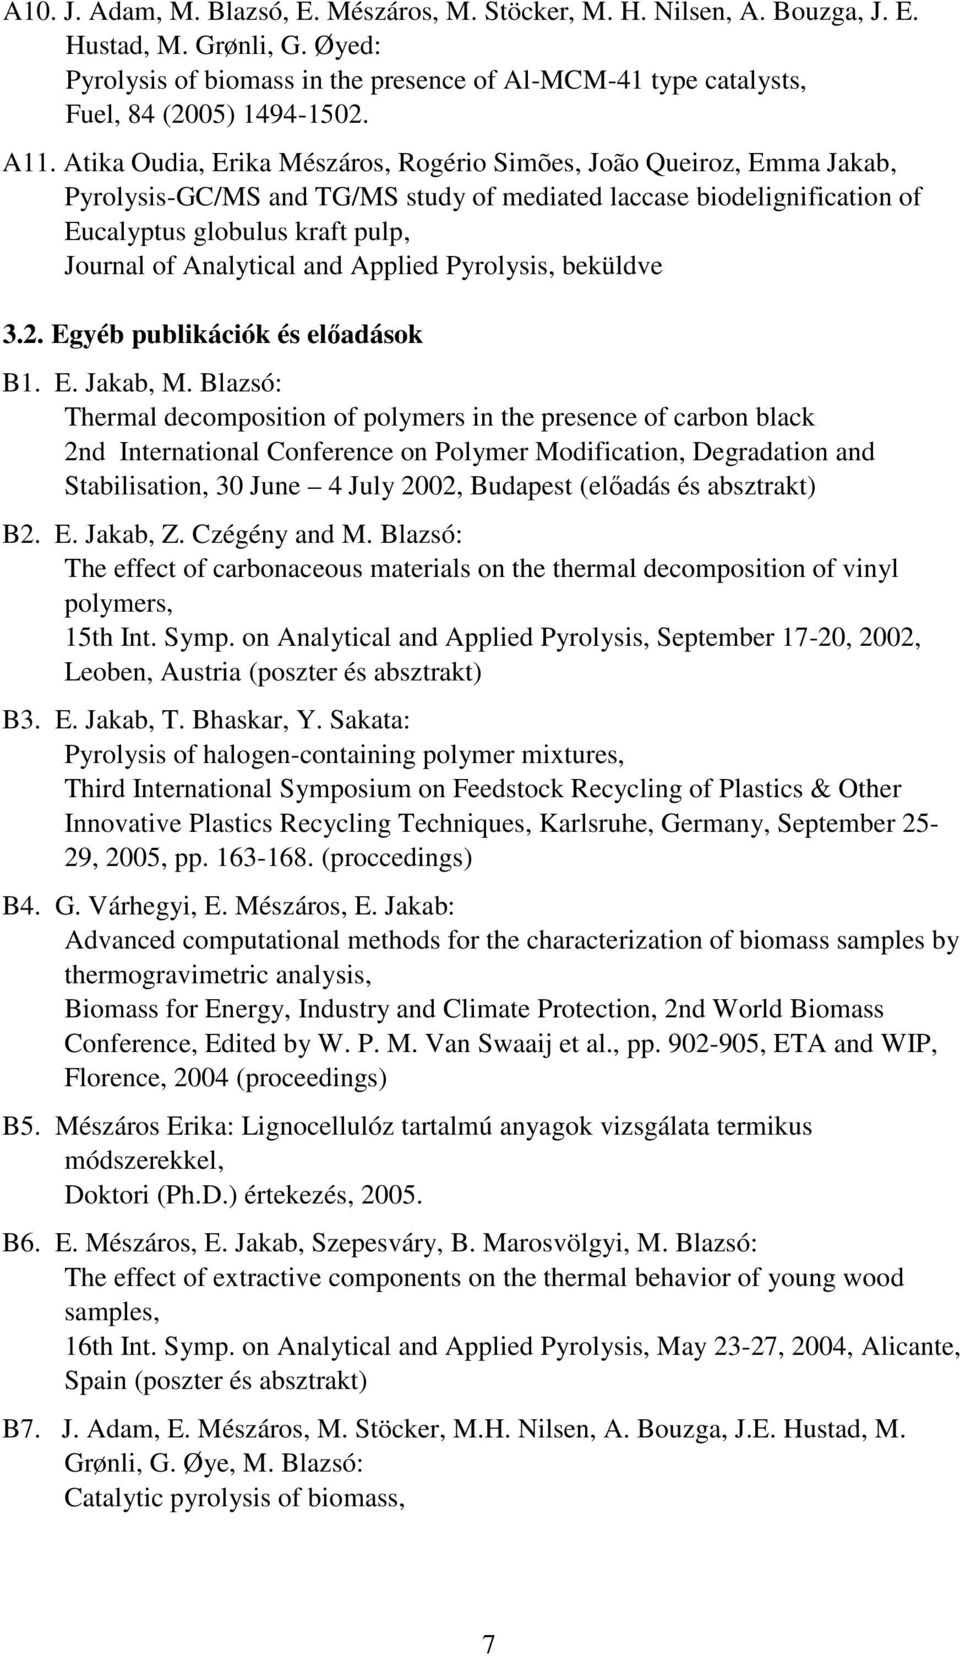 Atika Oudia, Erika Mészáros, Rogério Simões, João Queiroz, Emma Jakab, Pyrolysis-GC/MS and TG/MS study of mediated laccase biodelignification of Eucalyptus globulus kraft pulp, Journal of Analytical